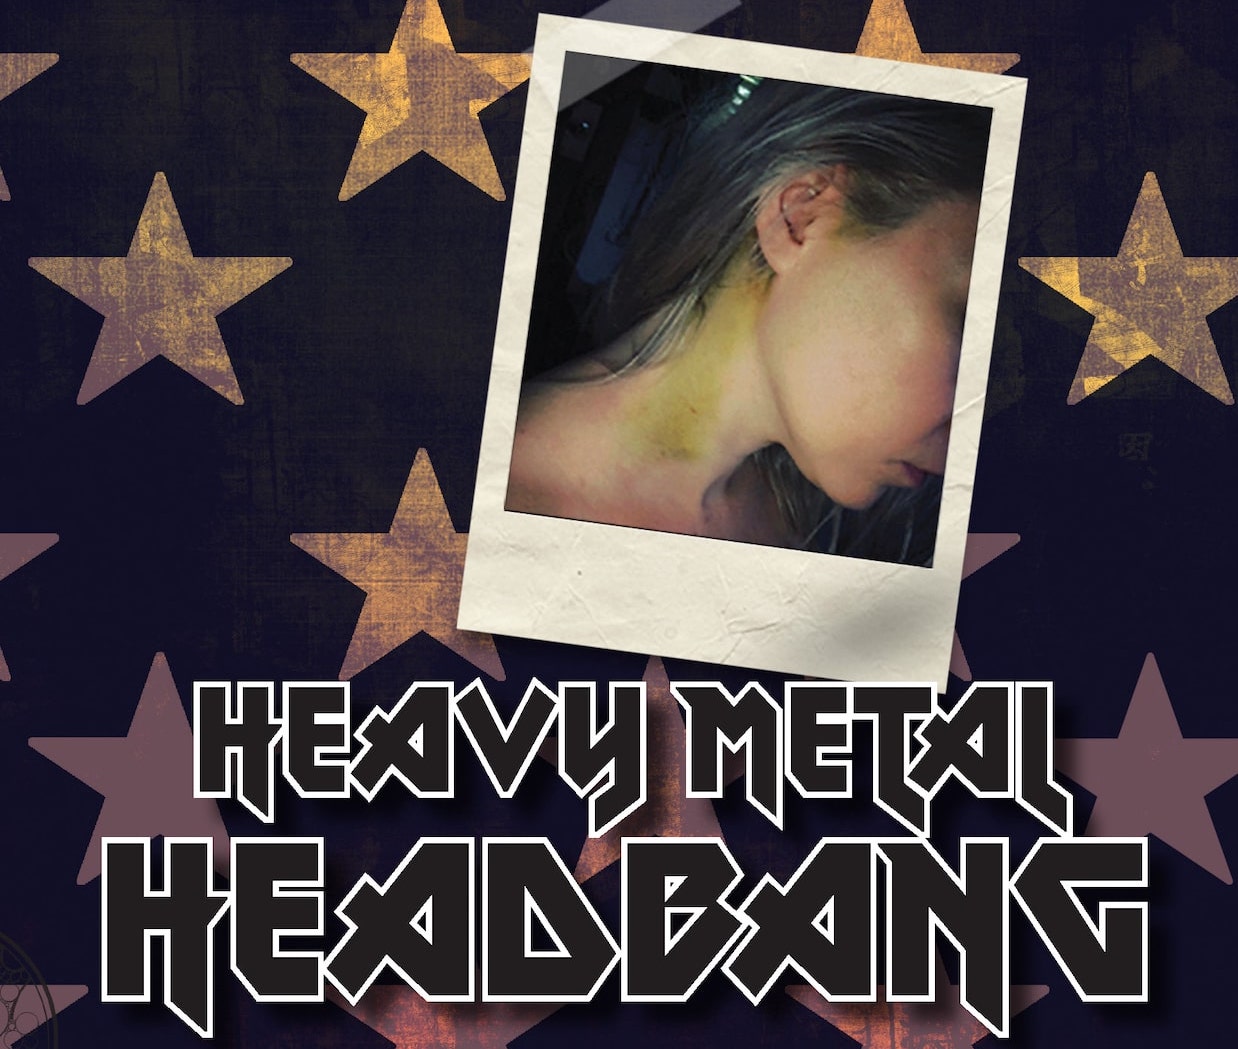 EXCLUSIVE: New memoir 'Heavy Metal Headbang' set for 2022 by Melissa Meszaros